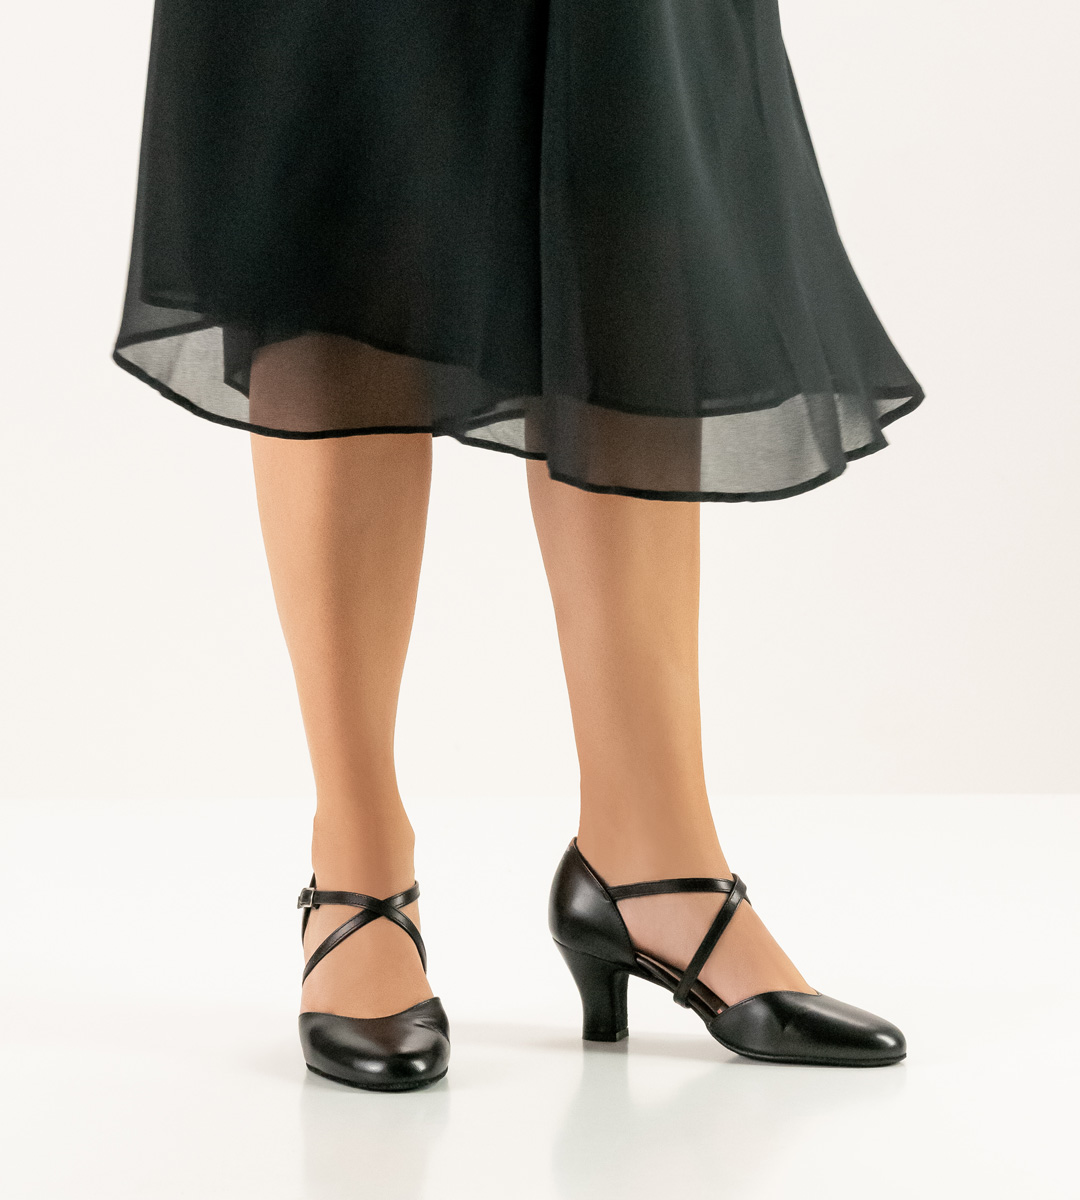 Comfortable Werner Kern ladies' dance shoe in combination with black skirt